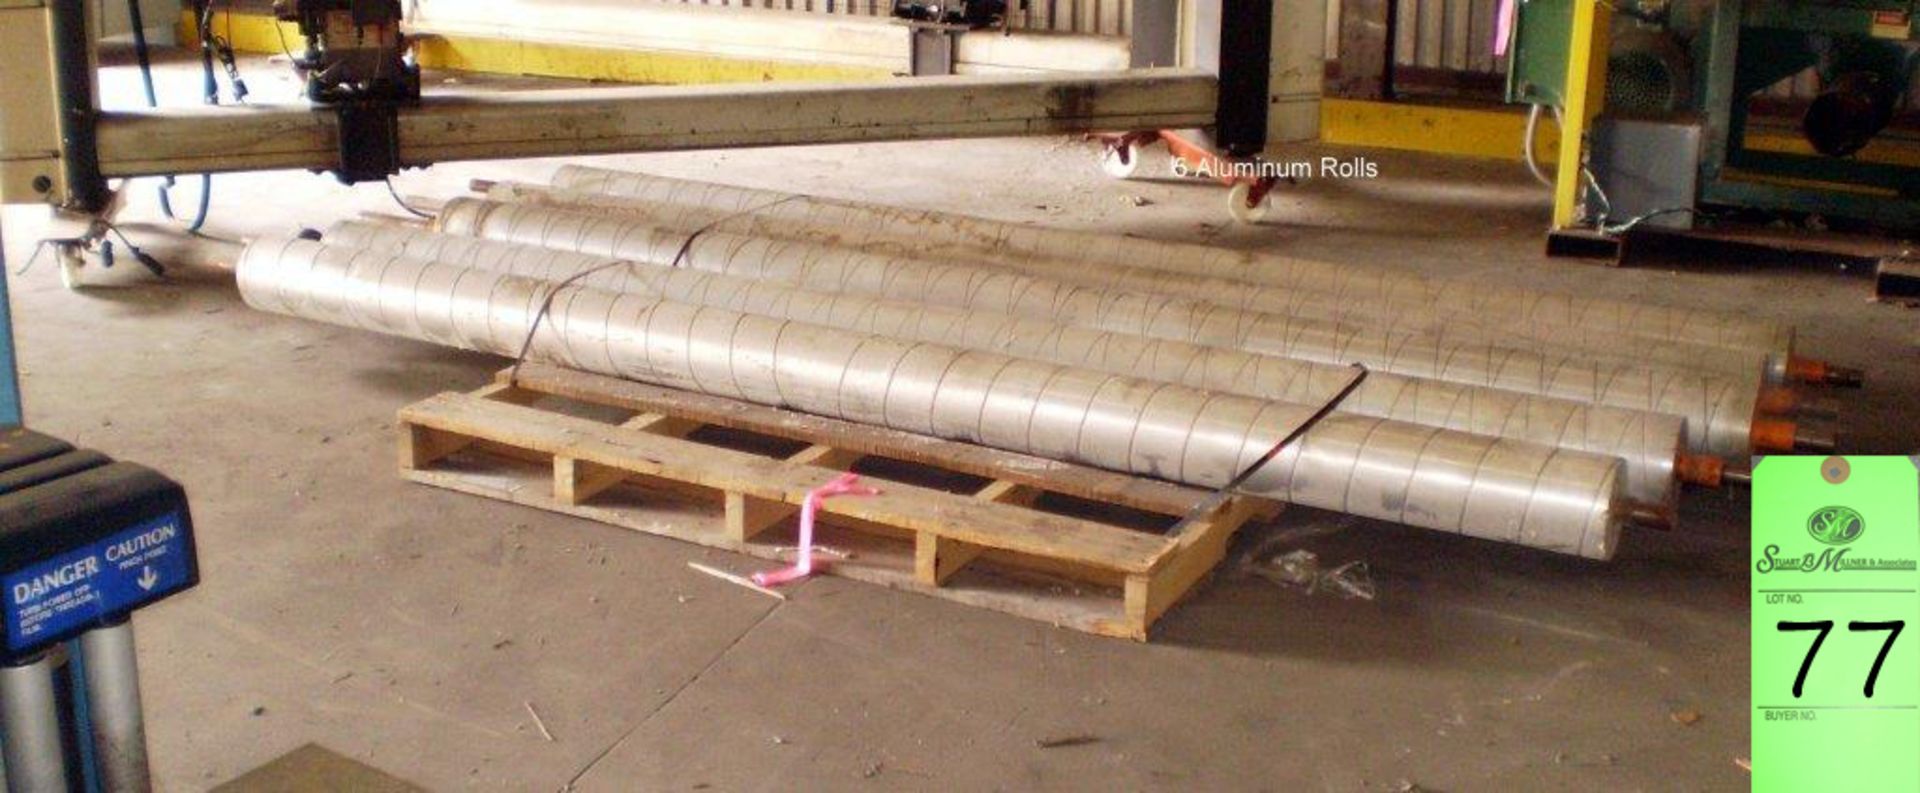 Aluminium Rolls; 5 Aluminum Rolls (4)-11'6"OAl 7"Dia (1)-10' 11'OAL Steal Shaft Center Hollow Rolls. - Image 2 of 2